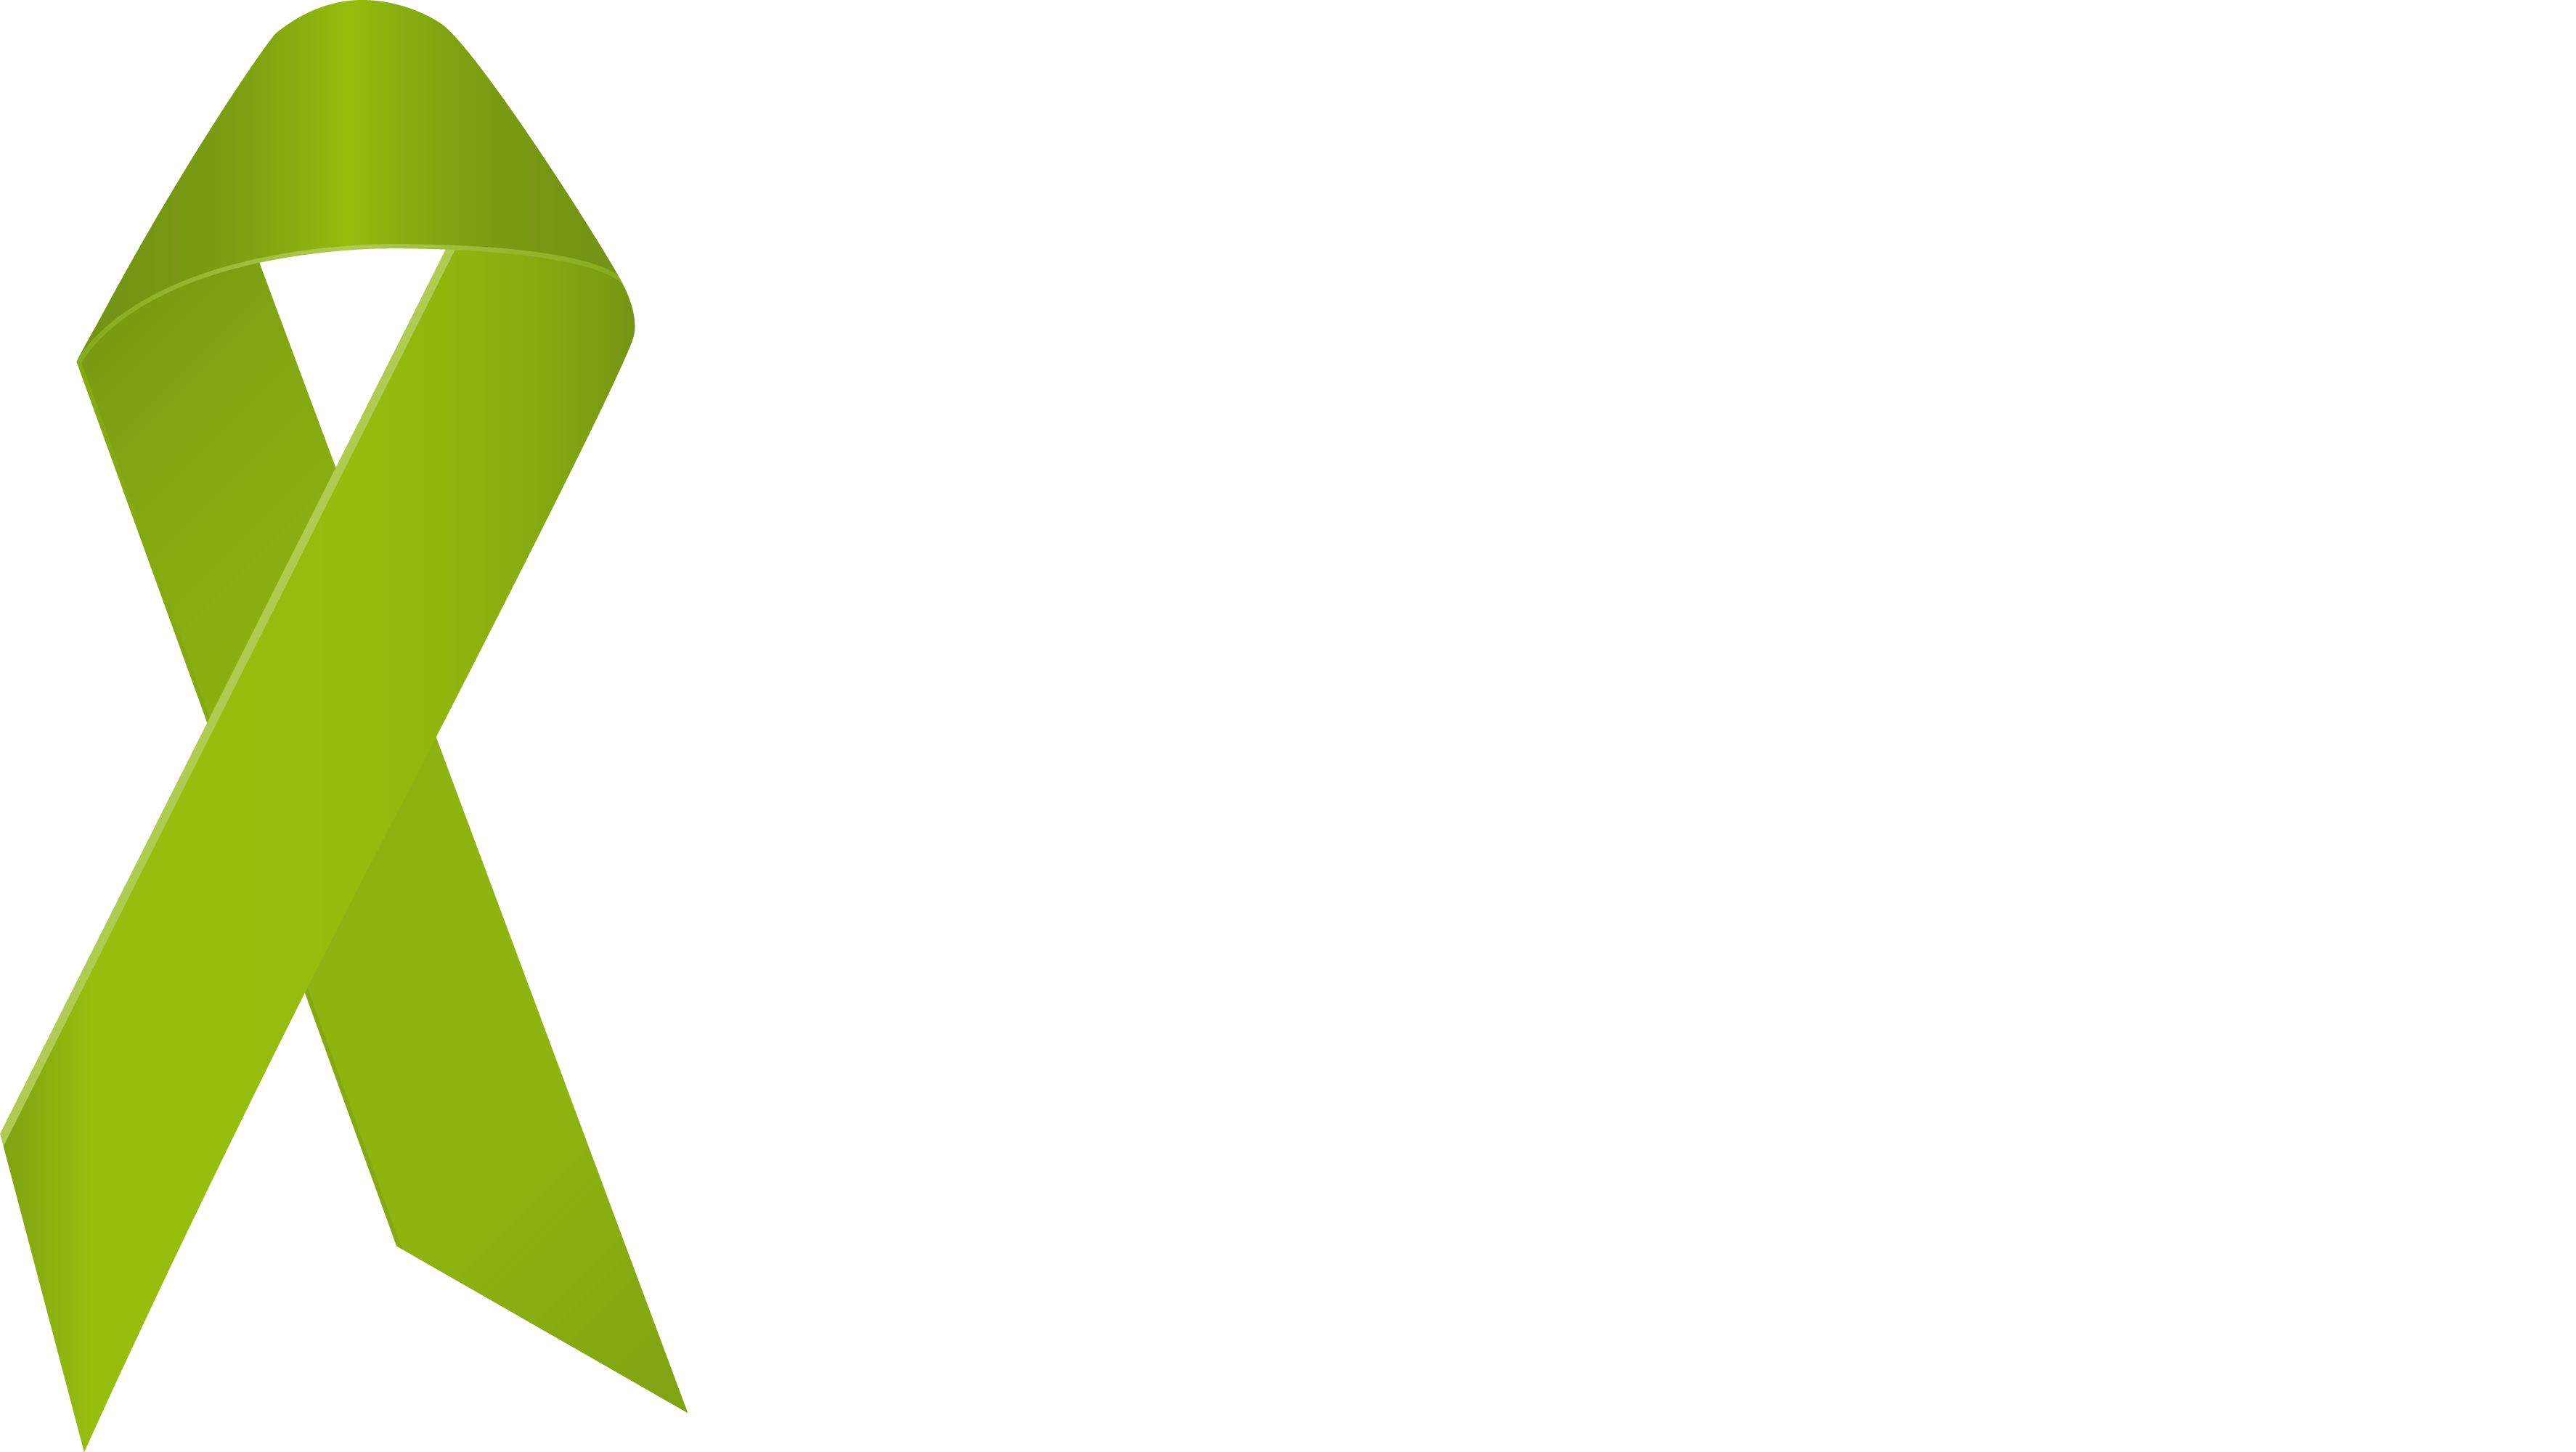 The green ribbon is the international symbol of mental health awareness.